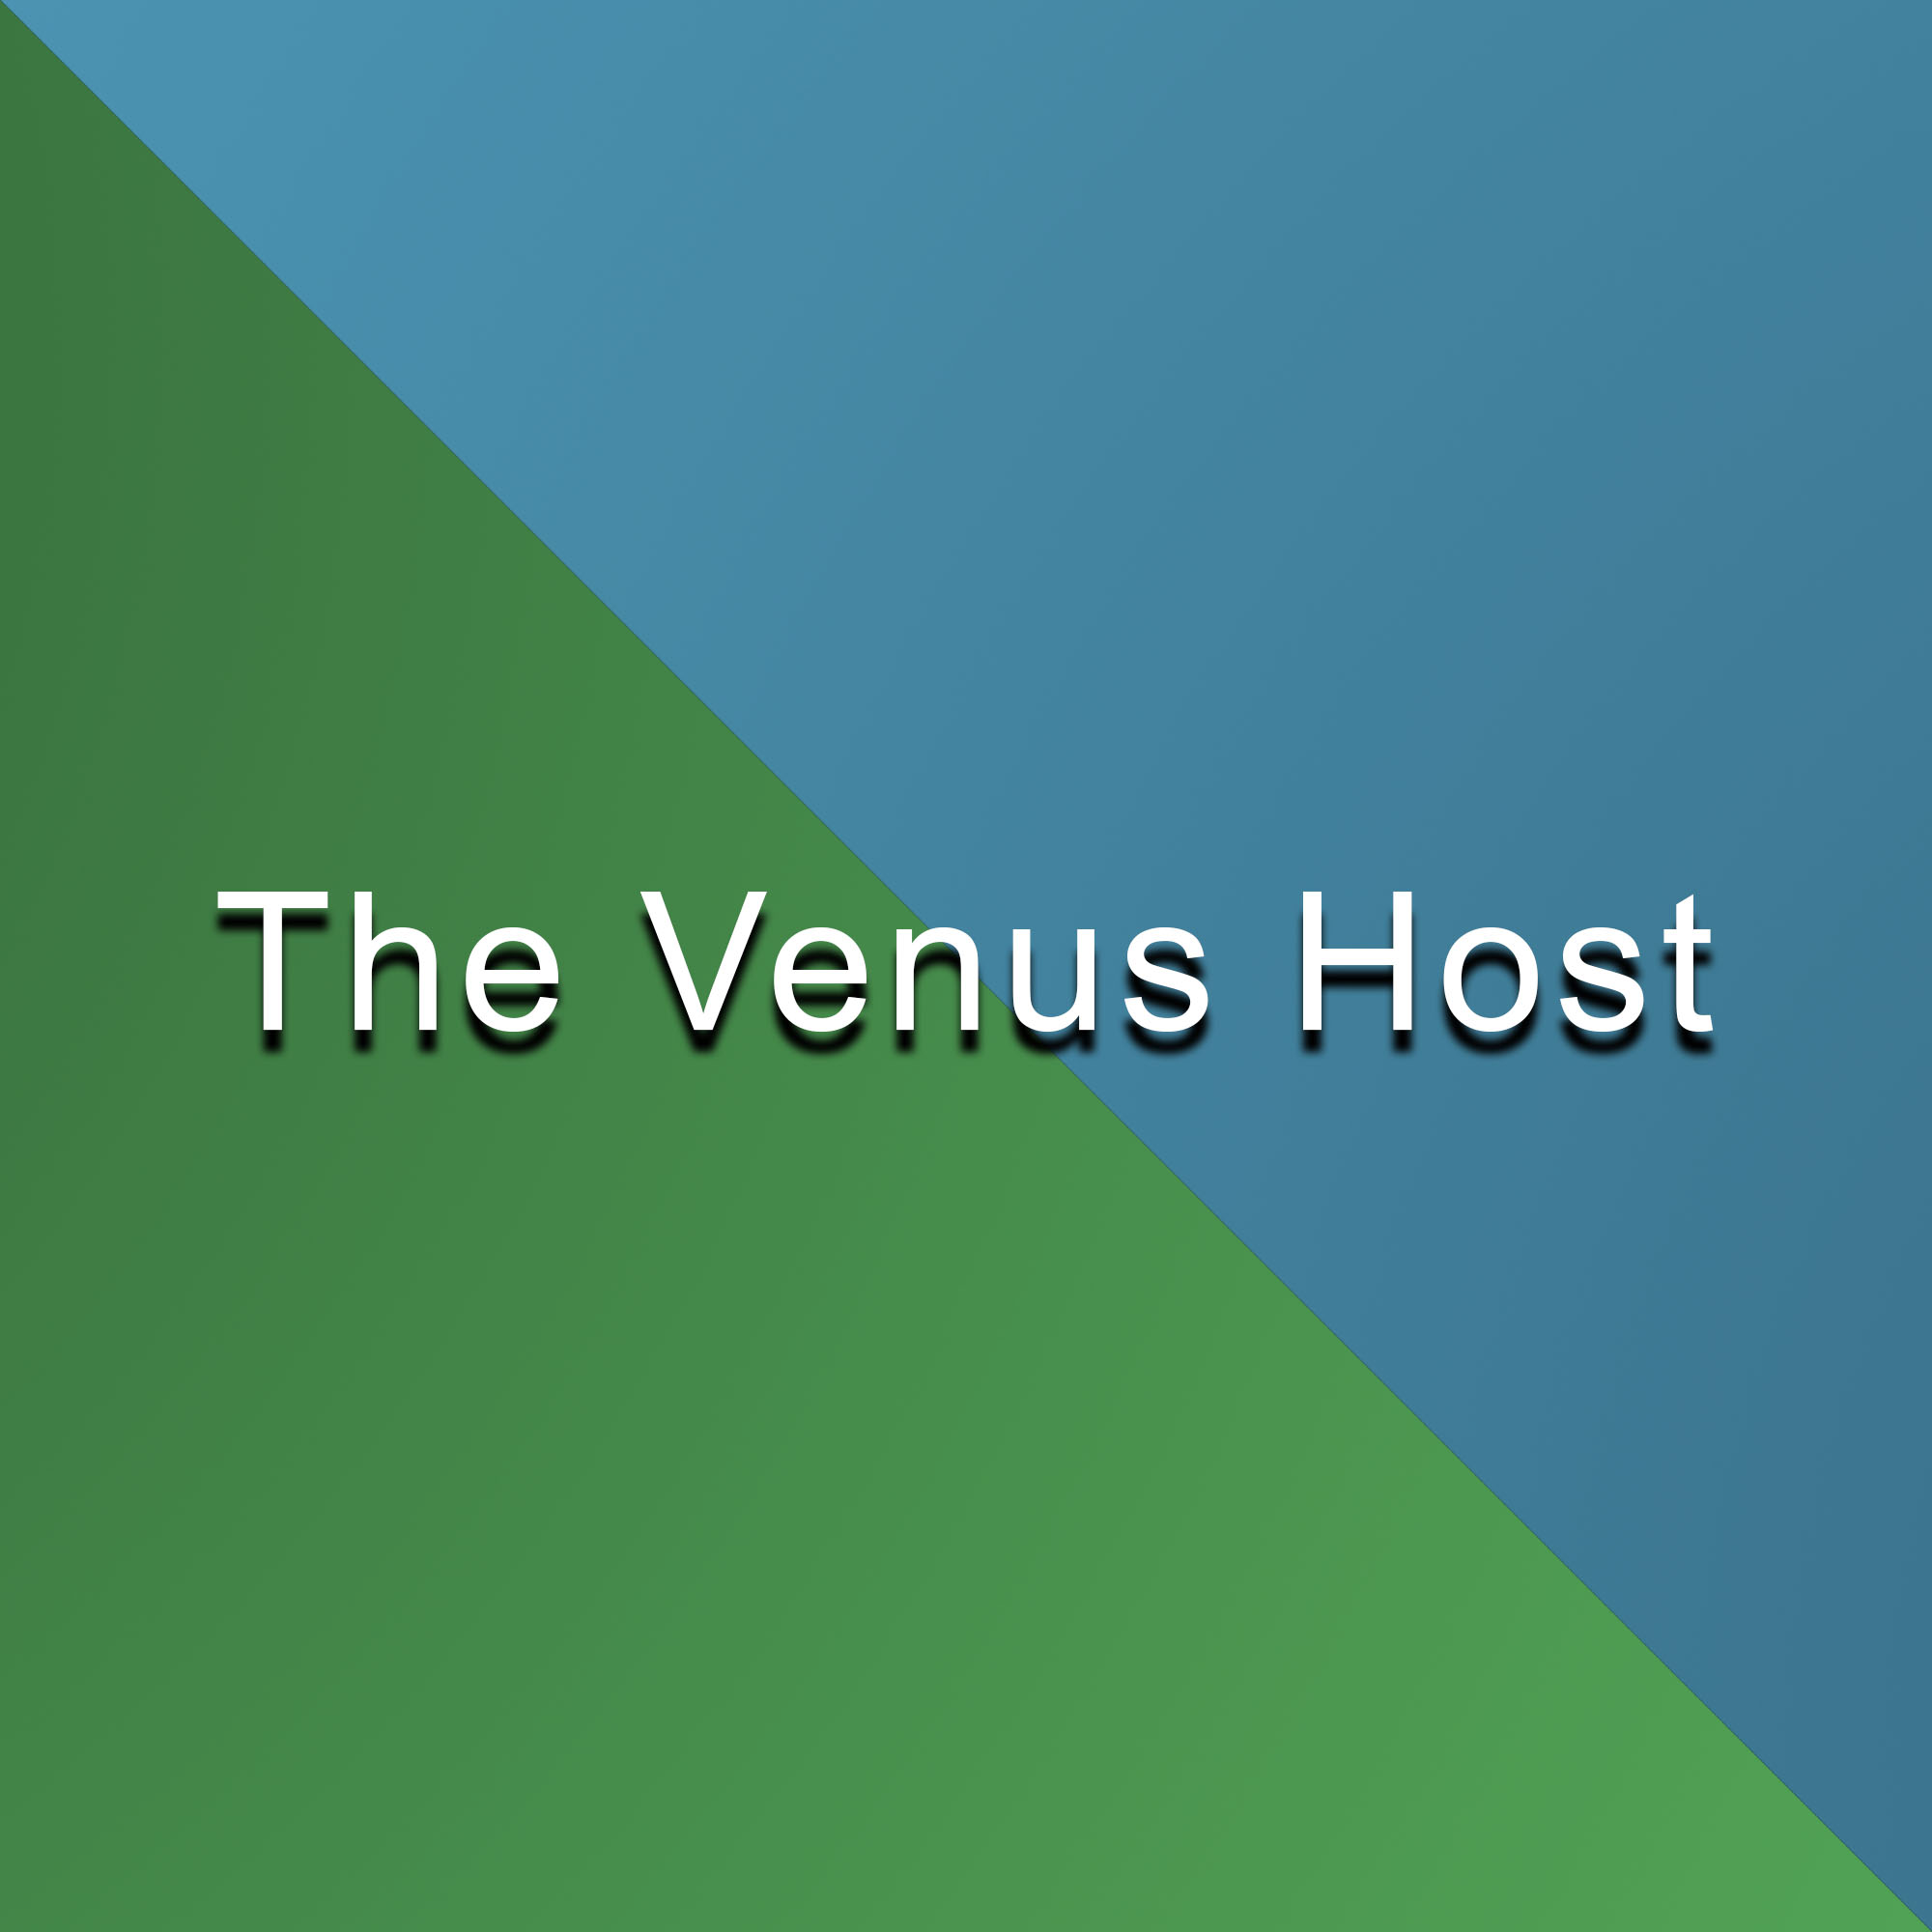 The Venus Host